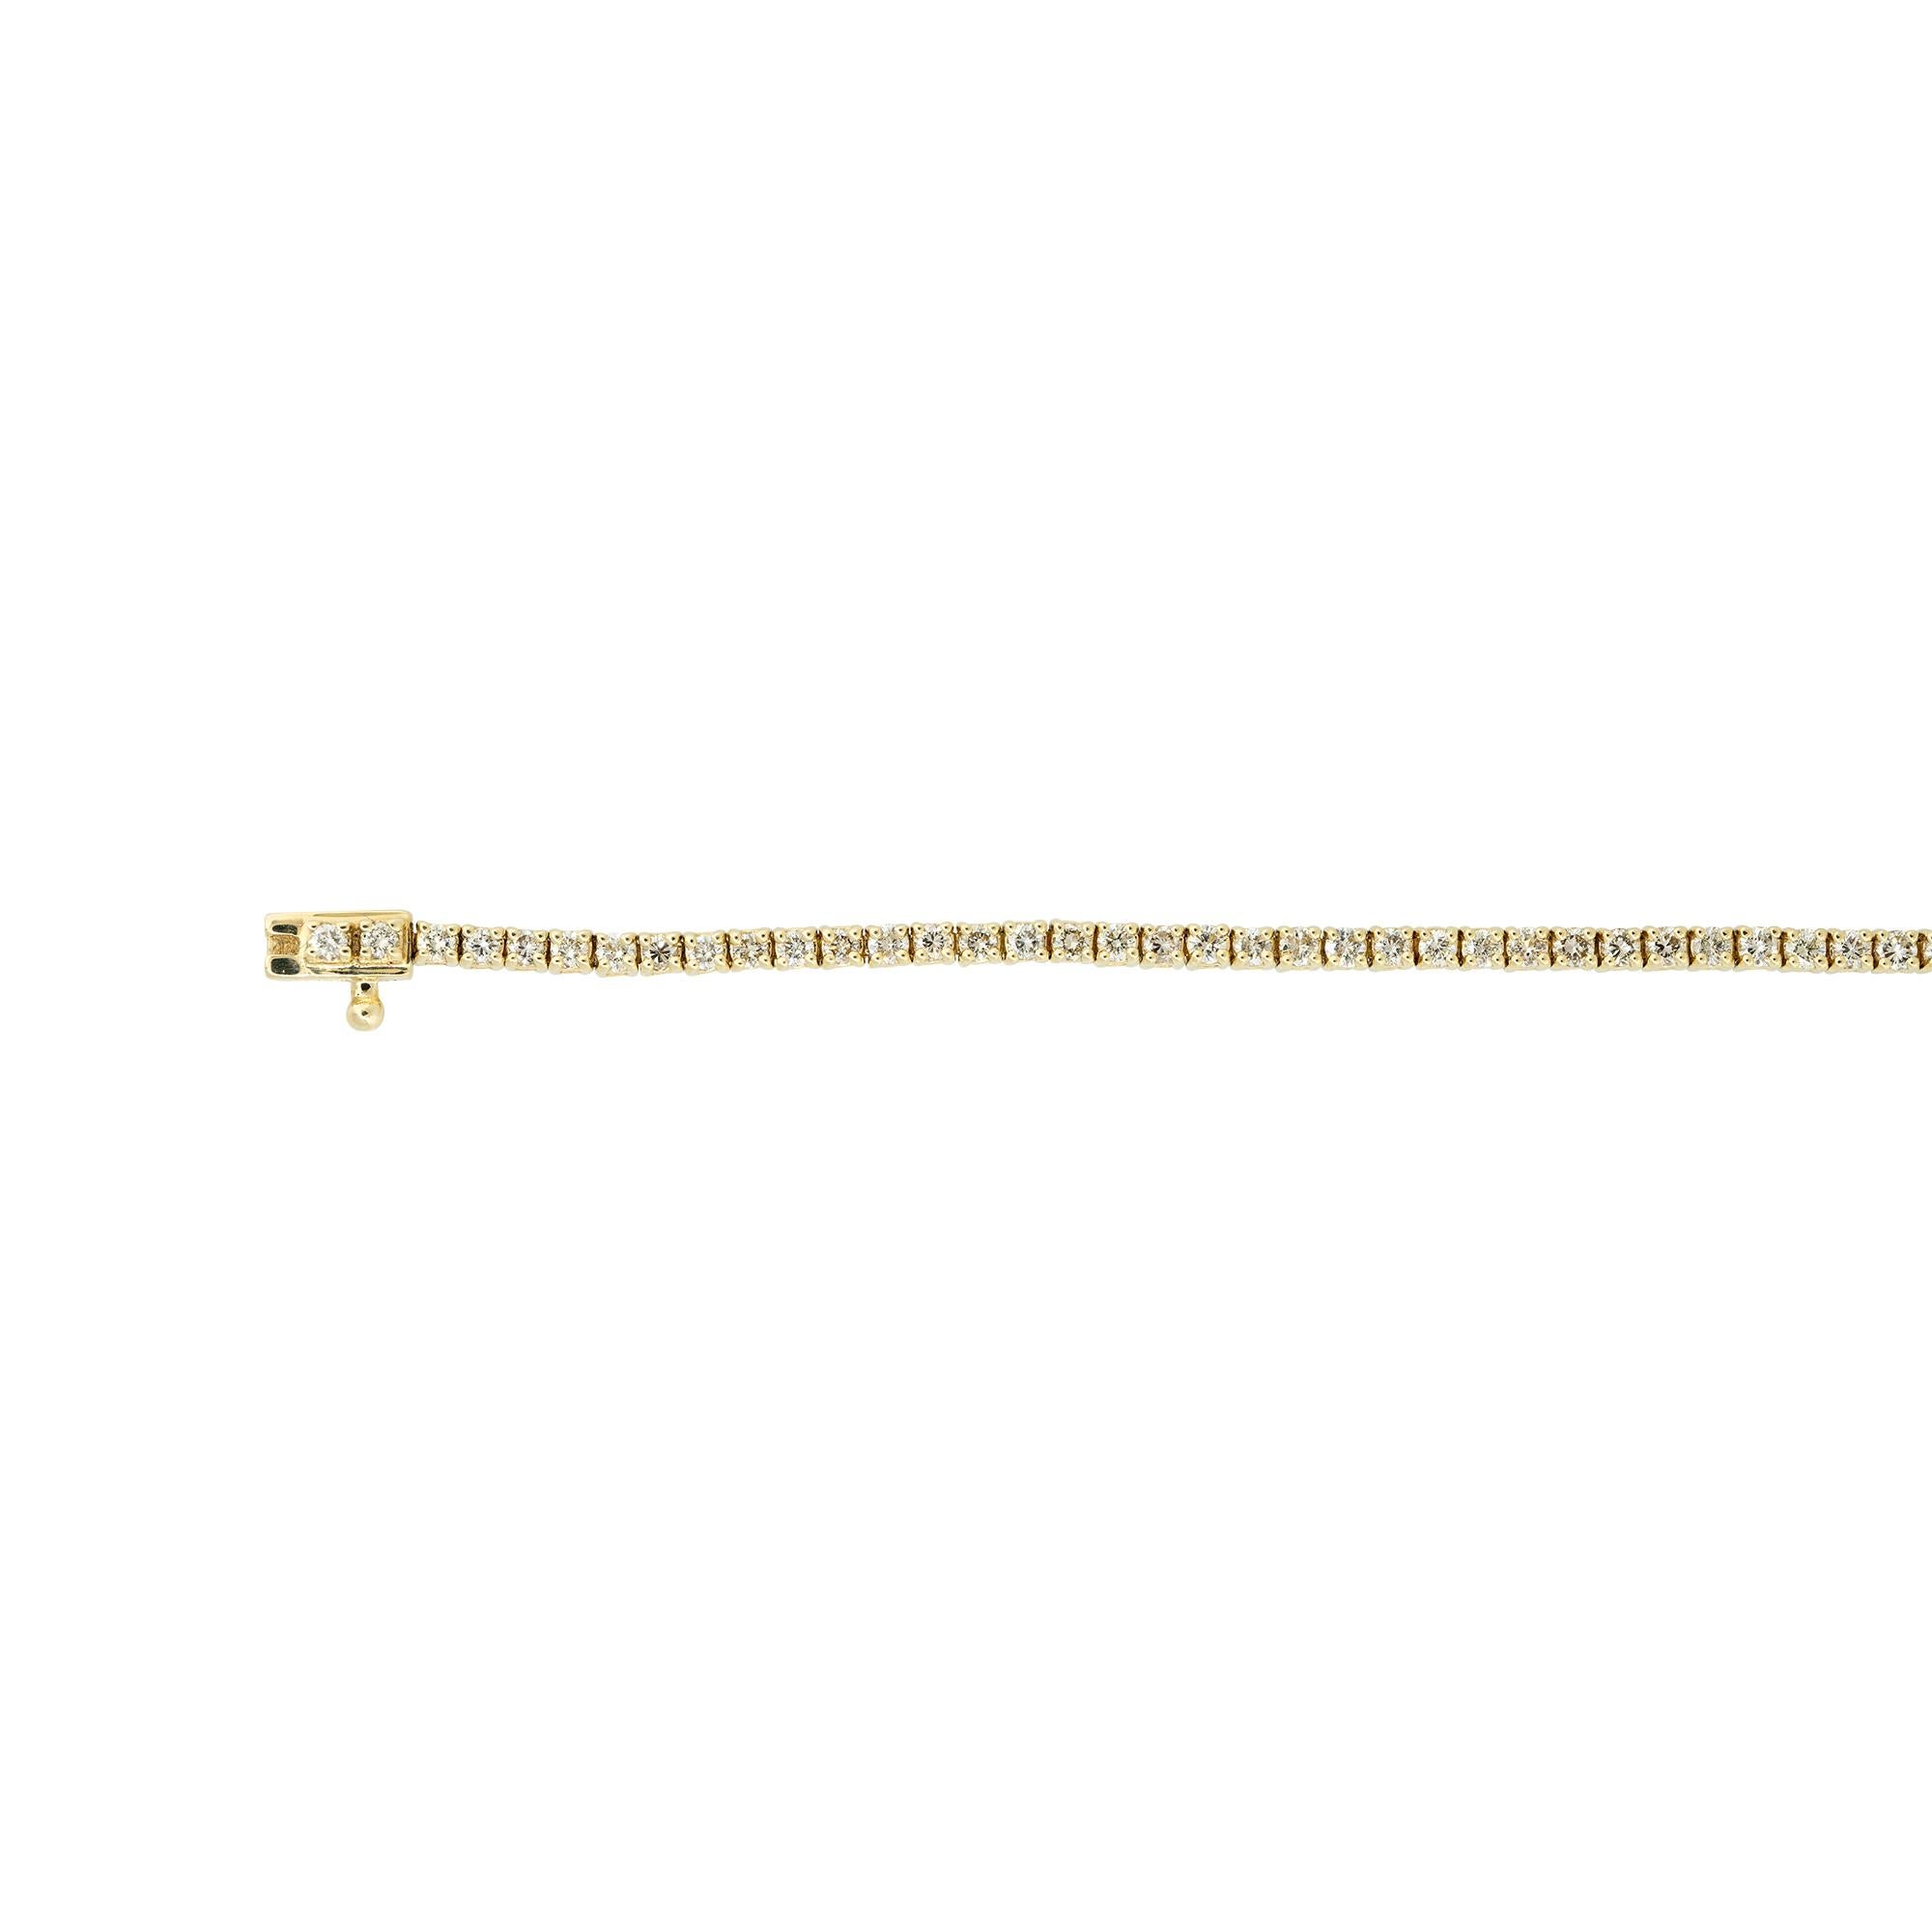 14k Yellow Gold 1.91ctw Diamond Tennis Bracelet

Material: 14k Yellow Gold
Diamond Details: Approximately 1.91ctw of Round Brilliant Diamonds
Total weight: 6.3g (4.1dwt) 
Size: 7